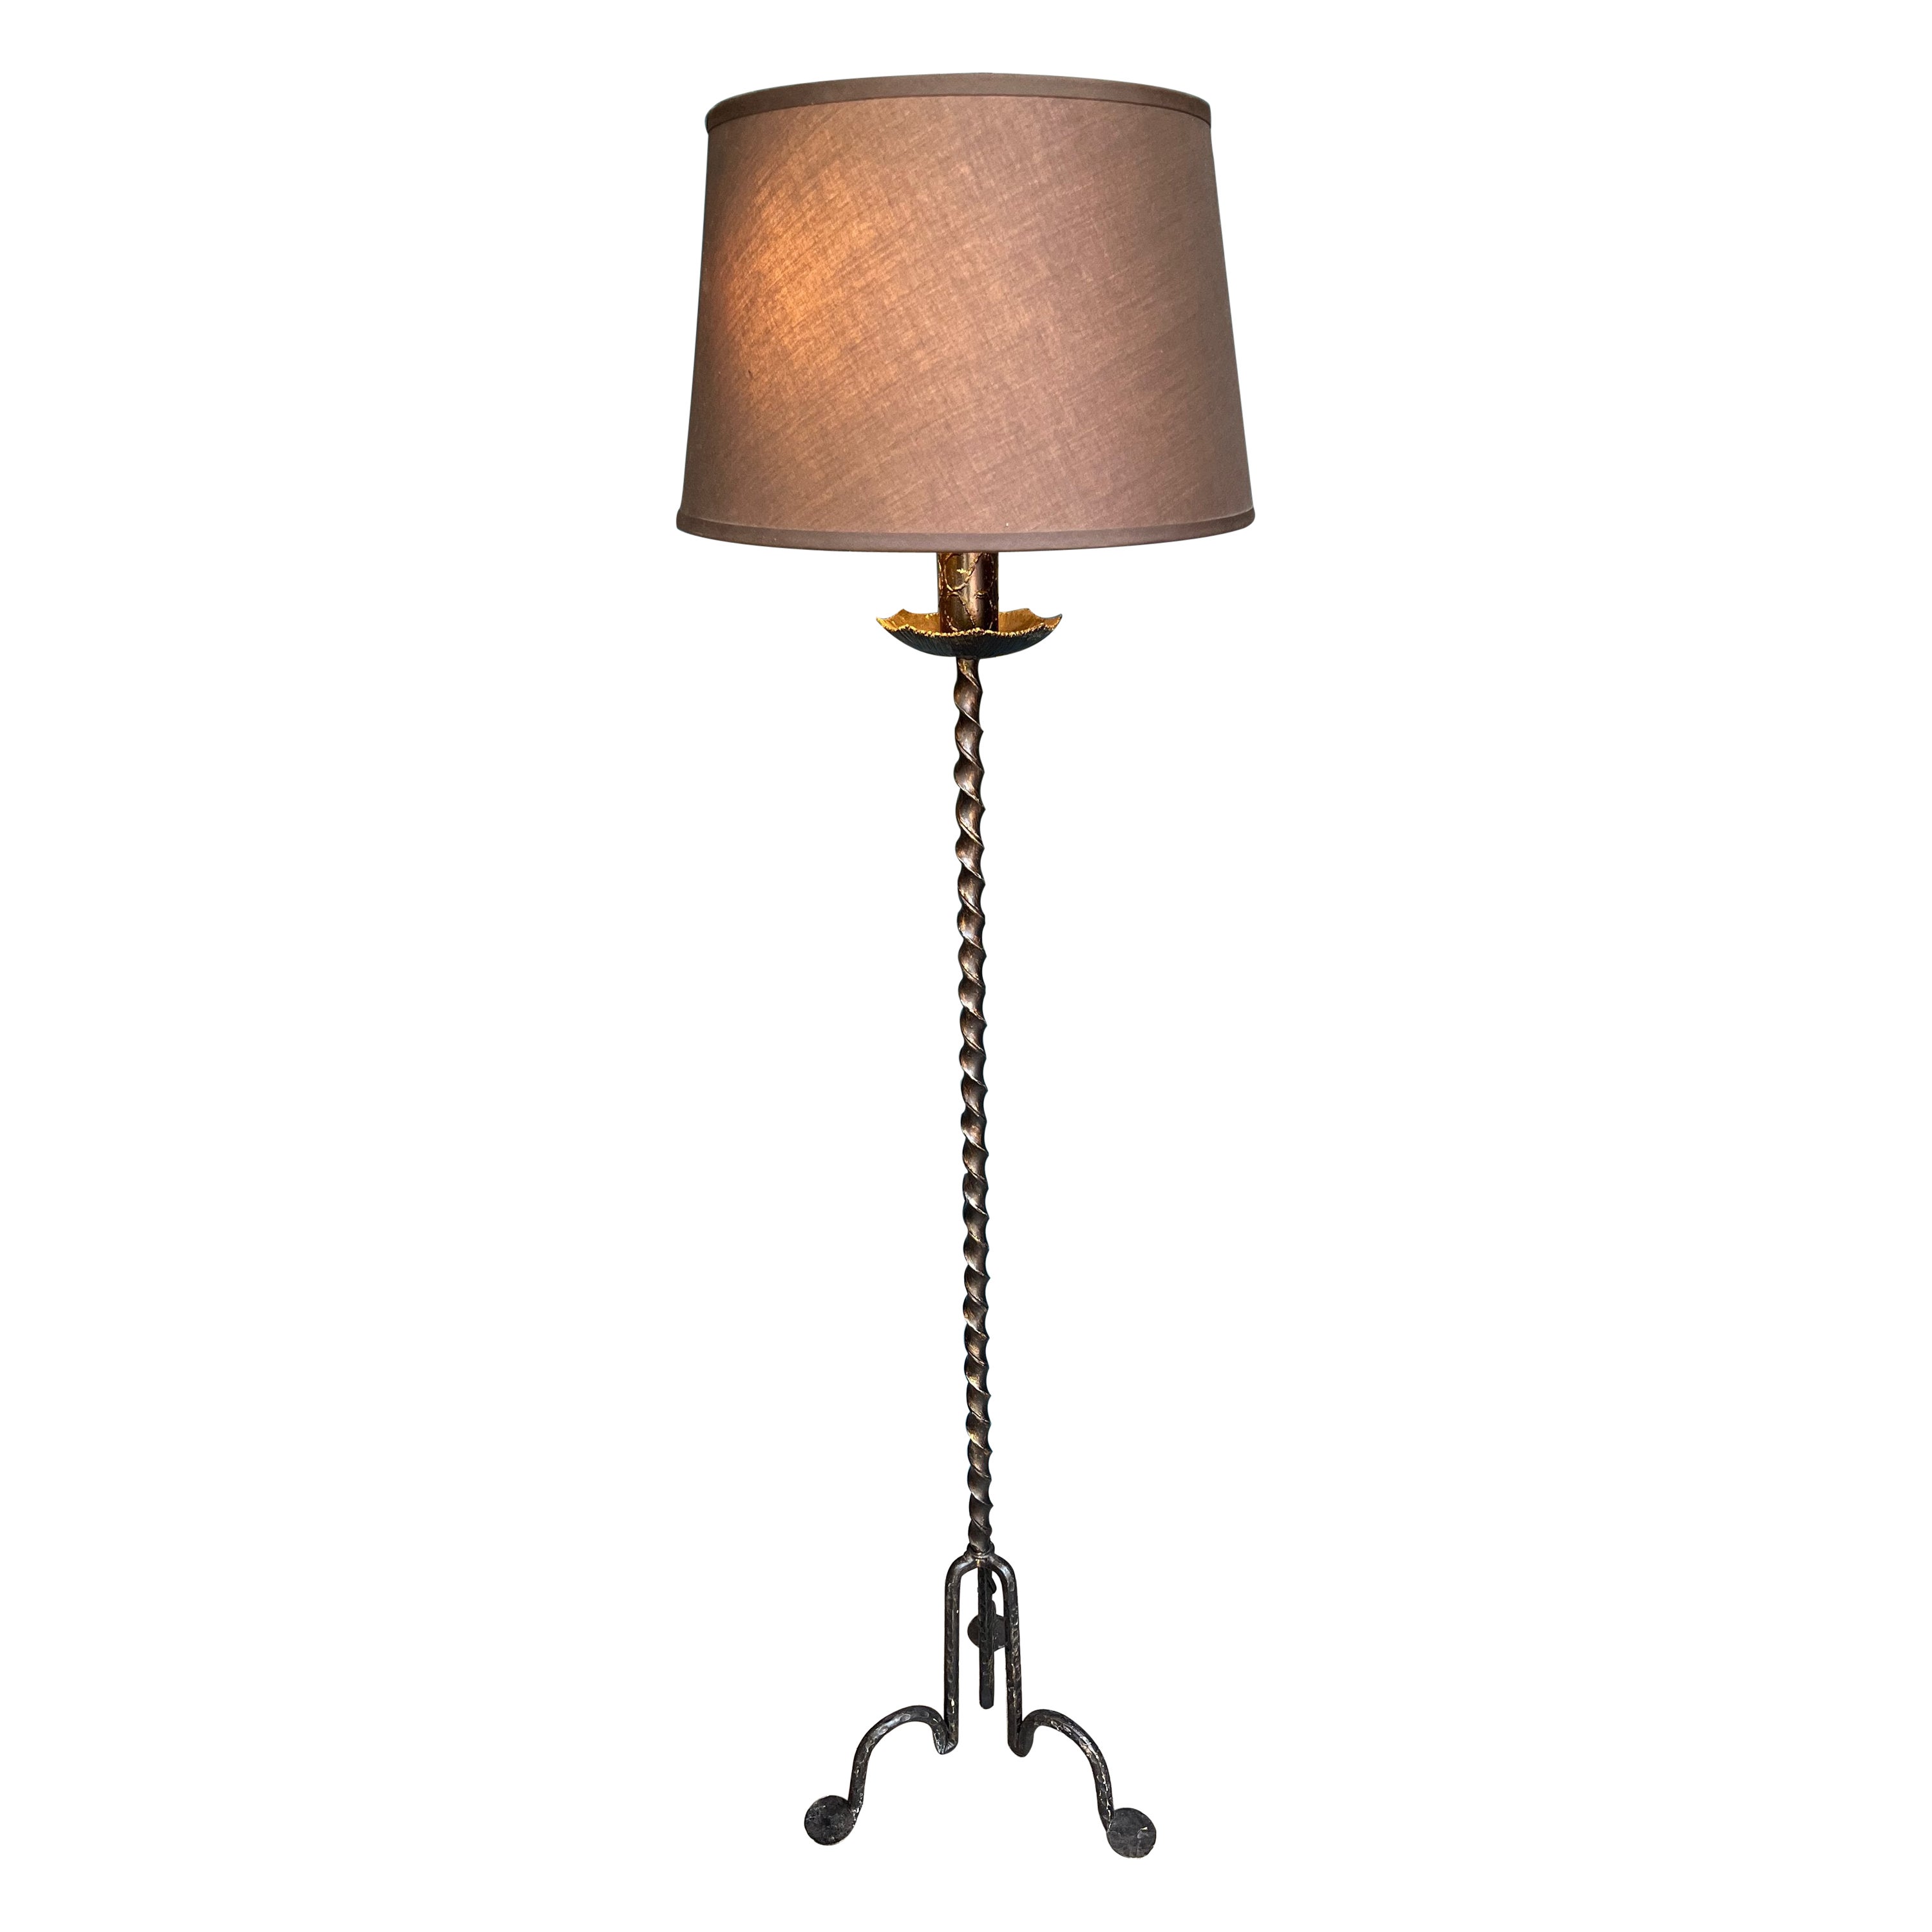 Spanish 1950s Floor Lamp in Black Iron For Sale